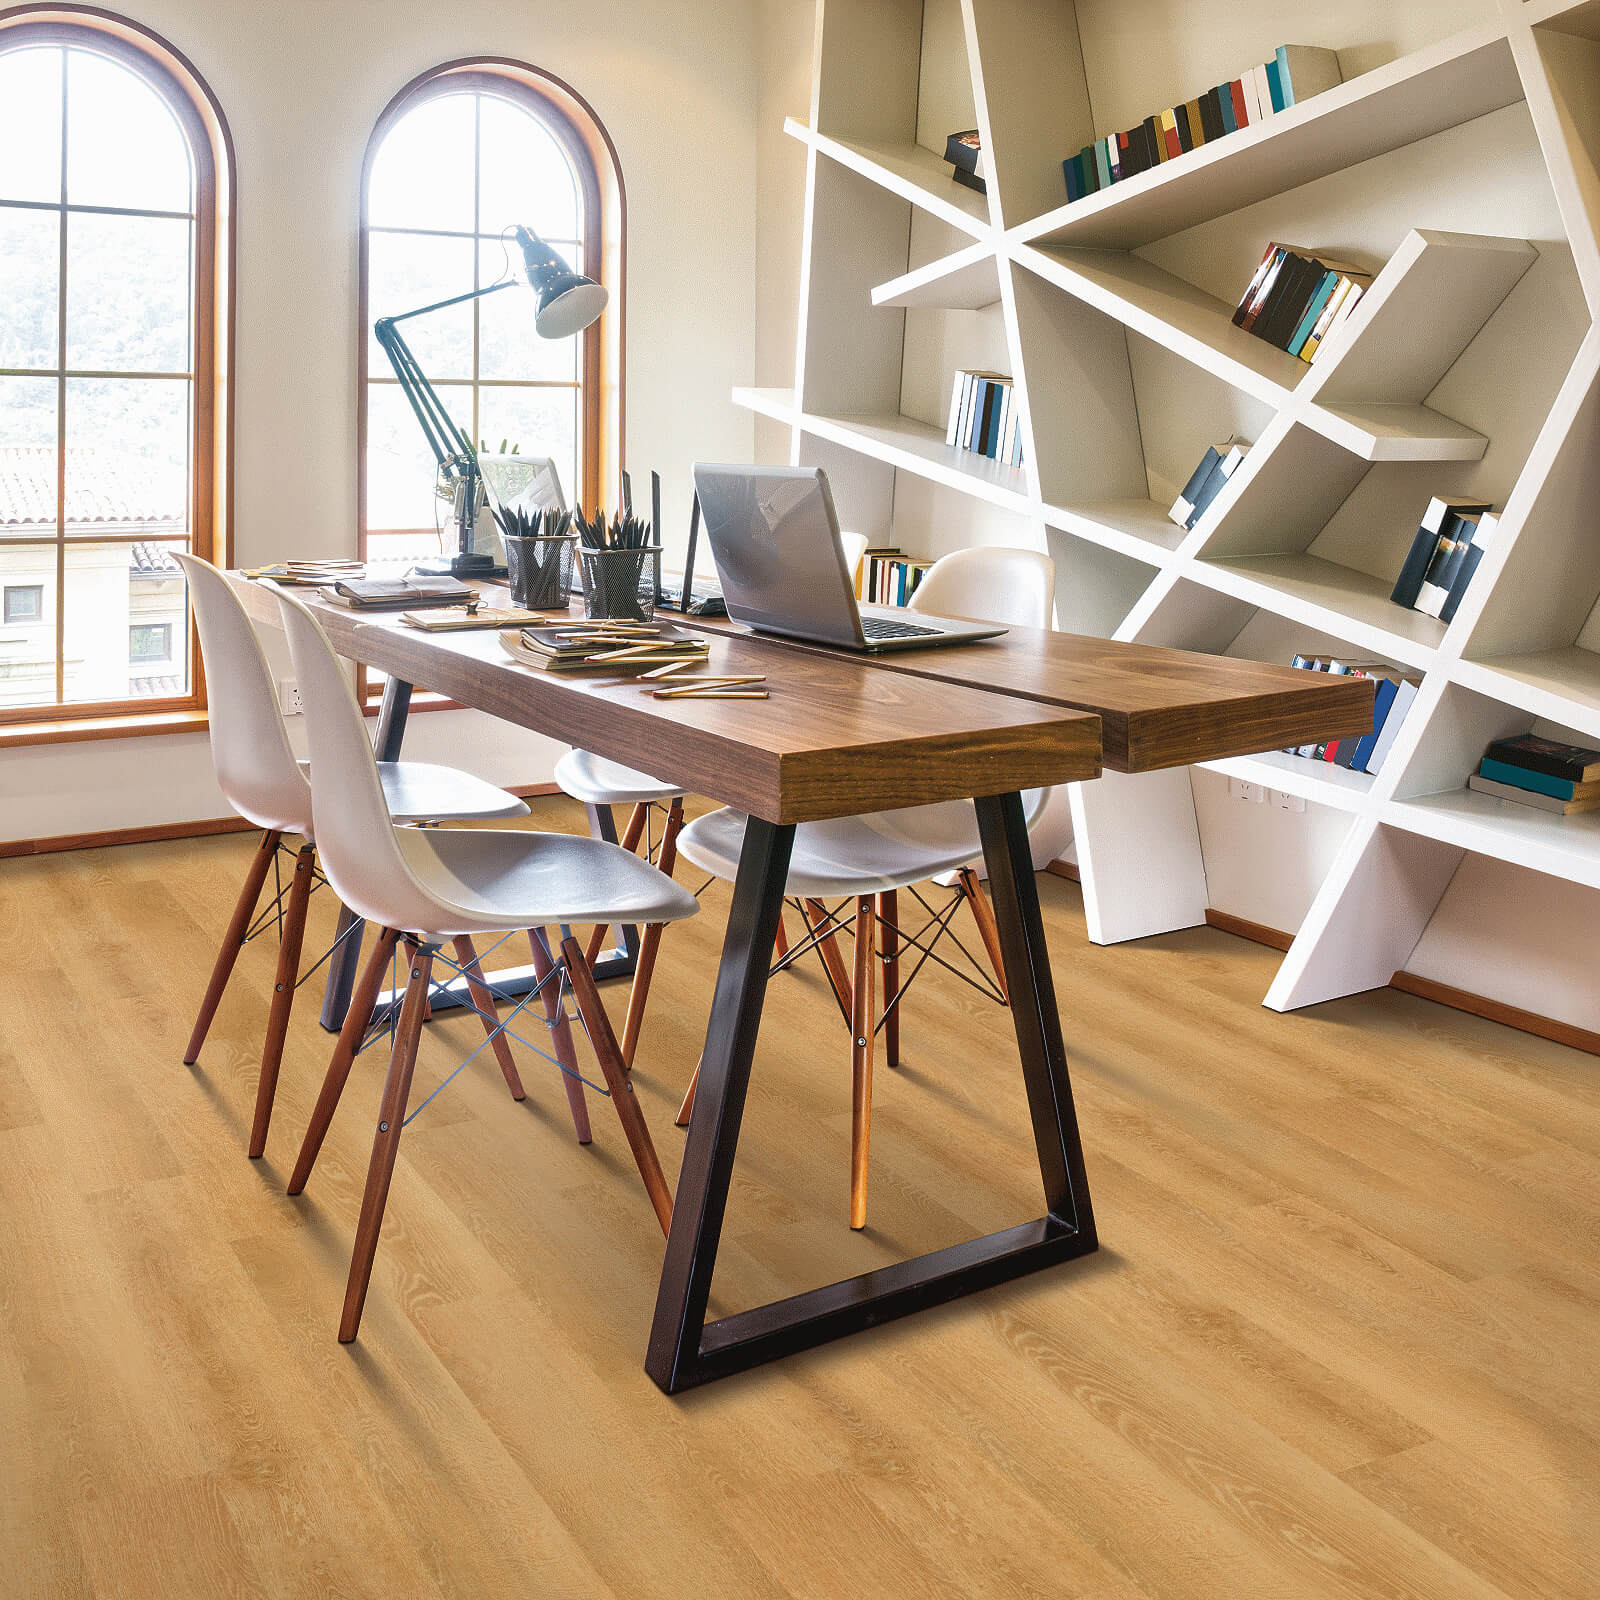 Vinyl flooring for study room | CarpetsPlus COLORTILE of Hutchinson